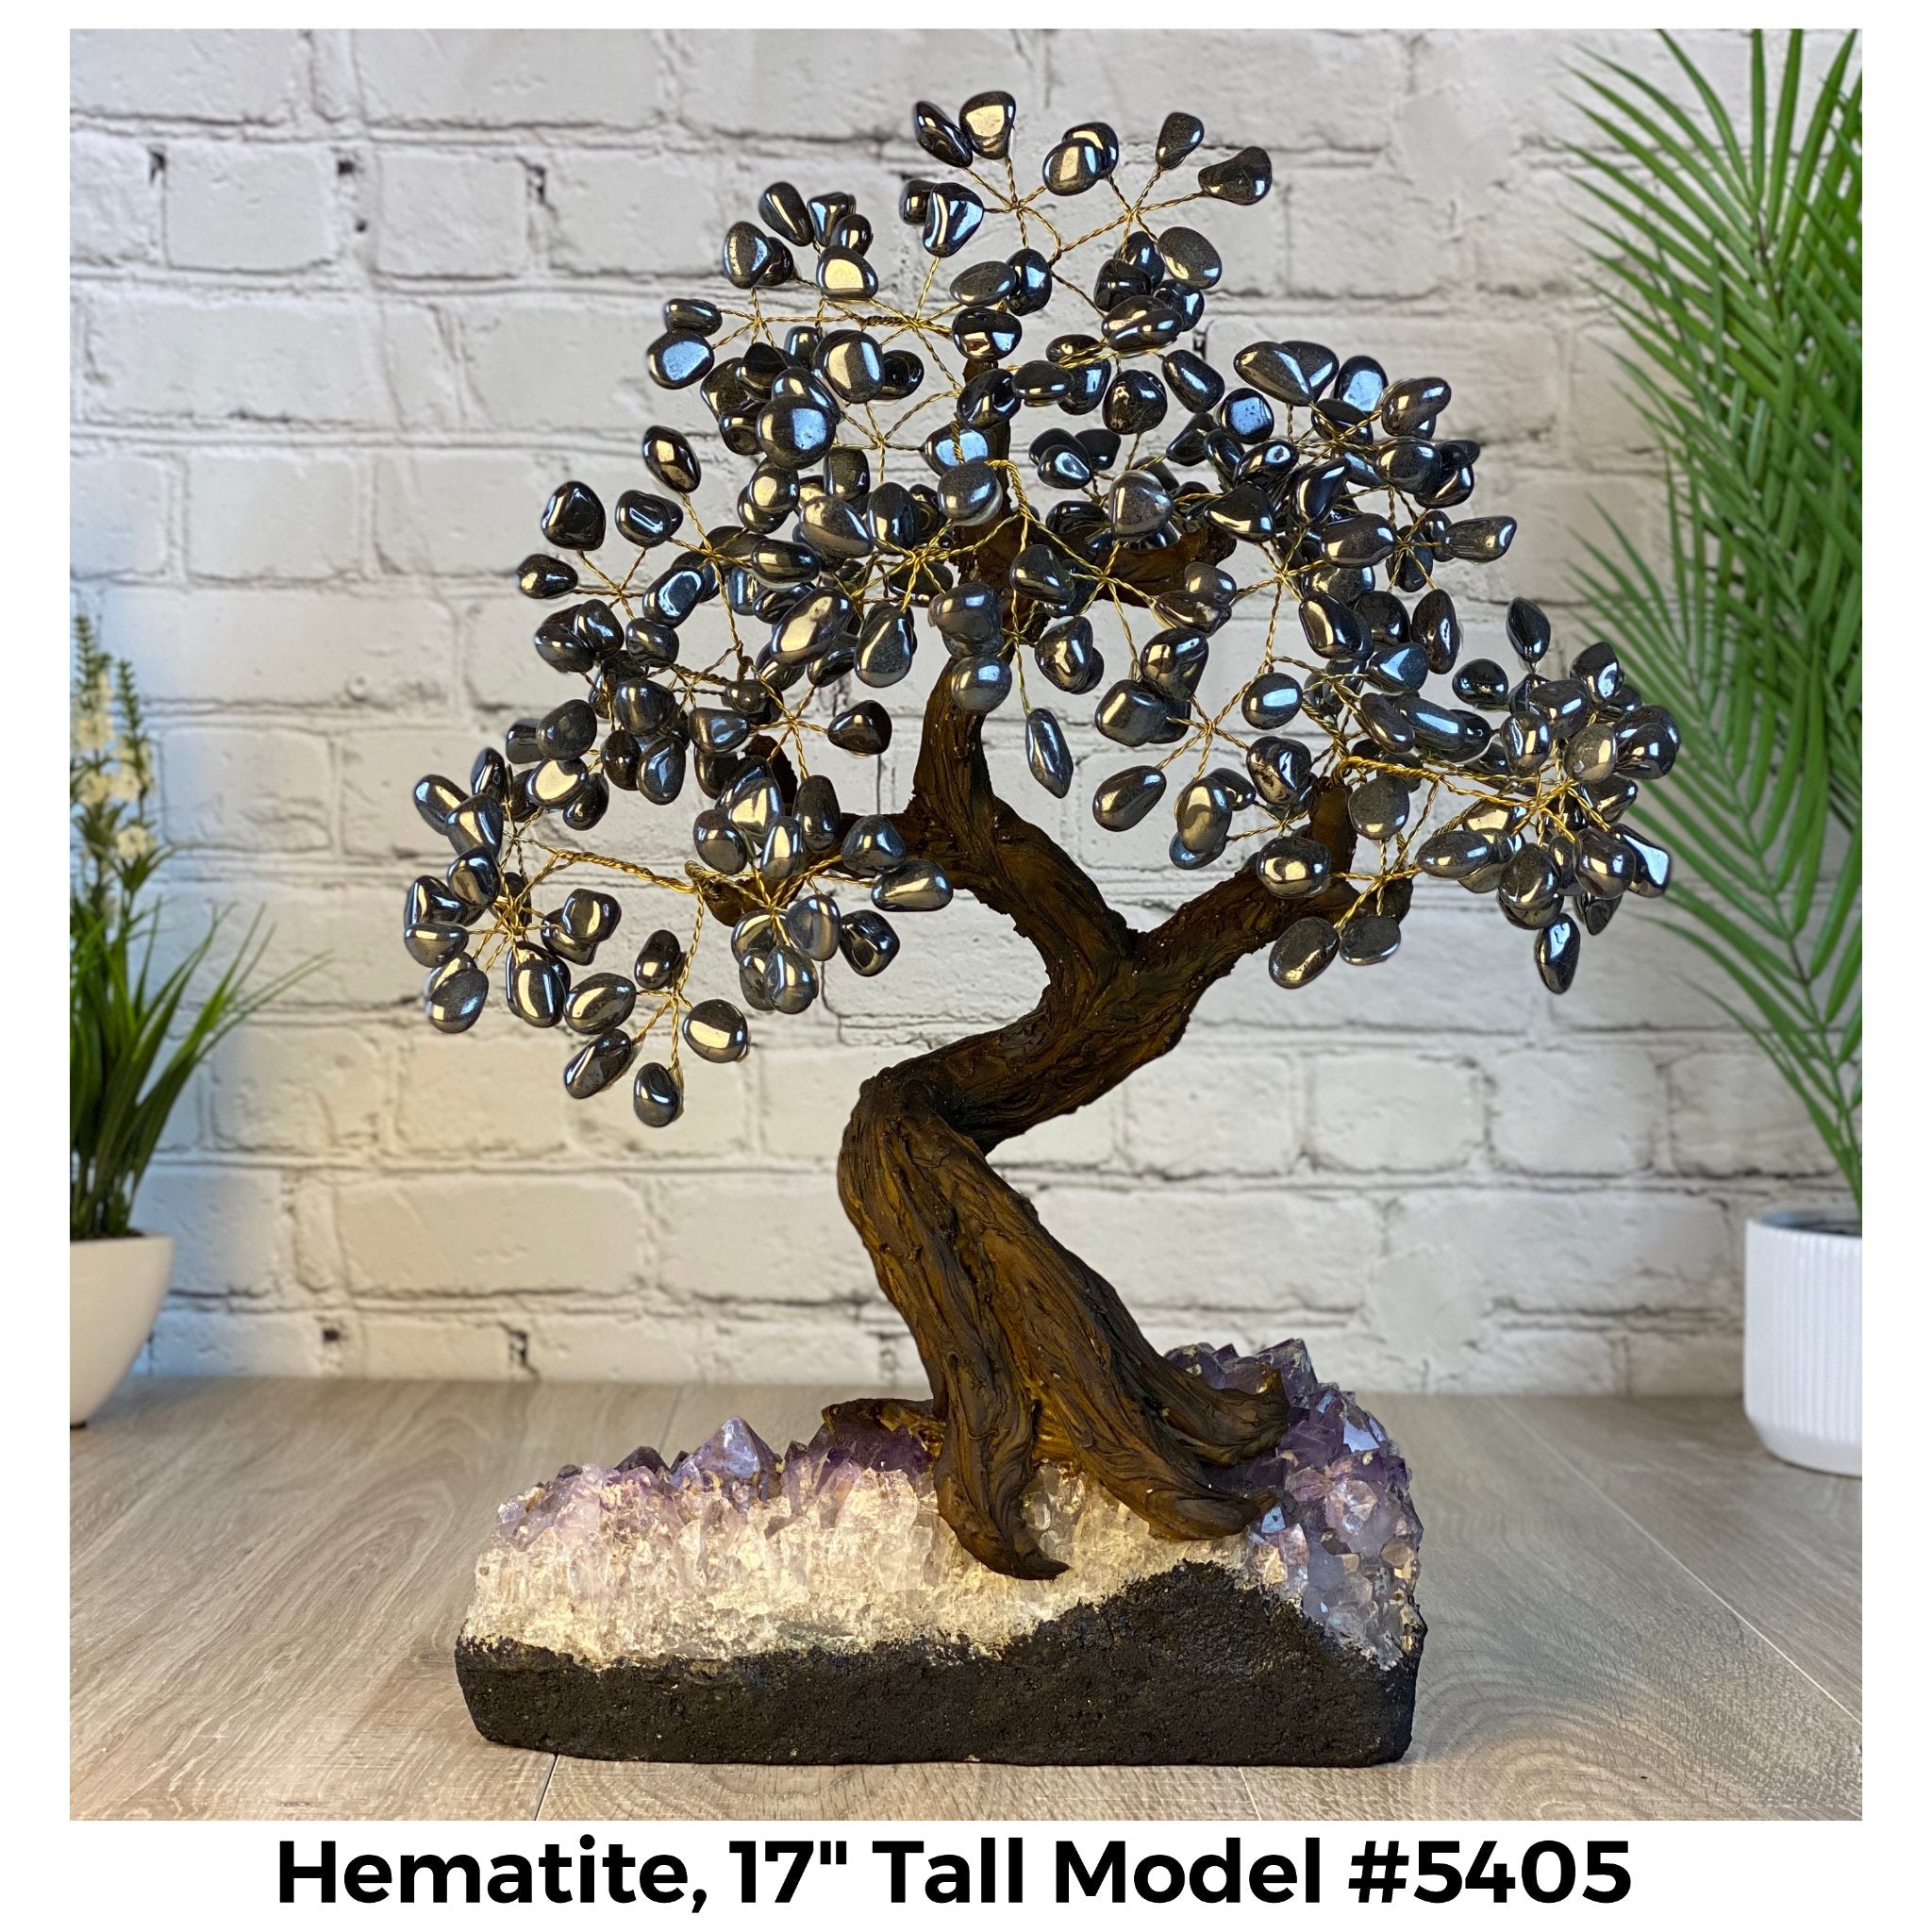 Hematite 17" Tall Handmade Gemstone Tree on a Crystal base, 240 Gems #5405HEMA - Brazil GemsBrazil GemsHematite 17" Tall Handmade Gemstone Tree on a Crystal base, 240 Gems #5405HEMAGemstone Trees5405HEMA